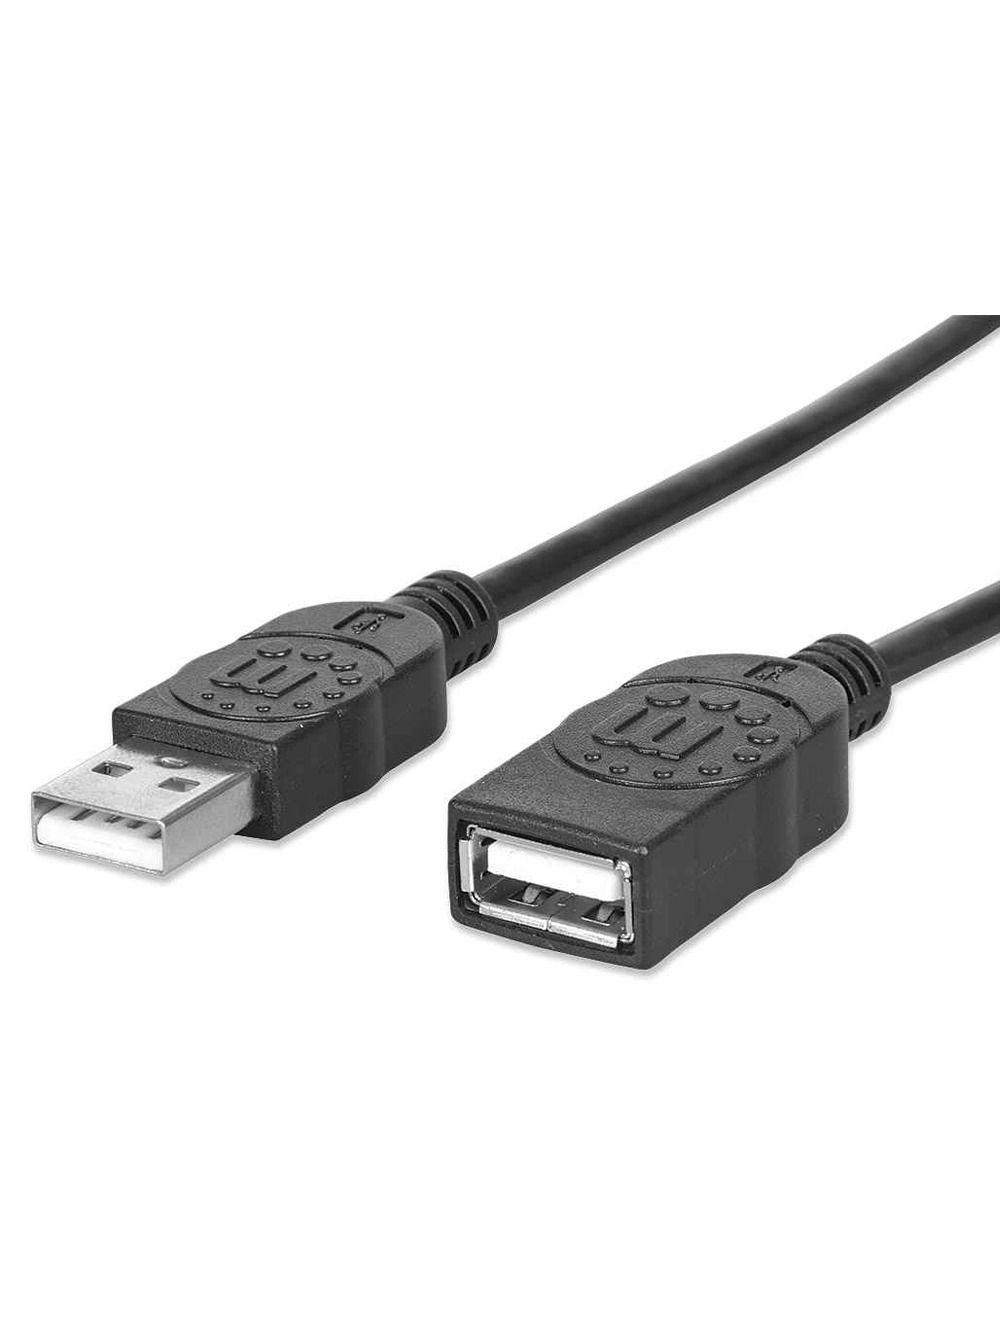 Manhattan USB Cable 352710 